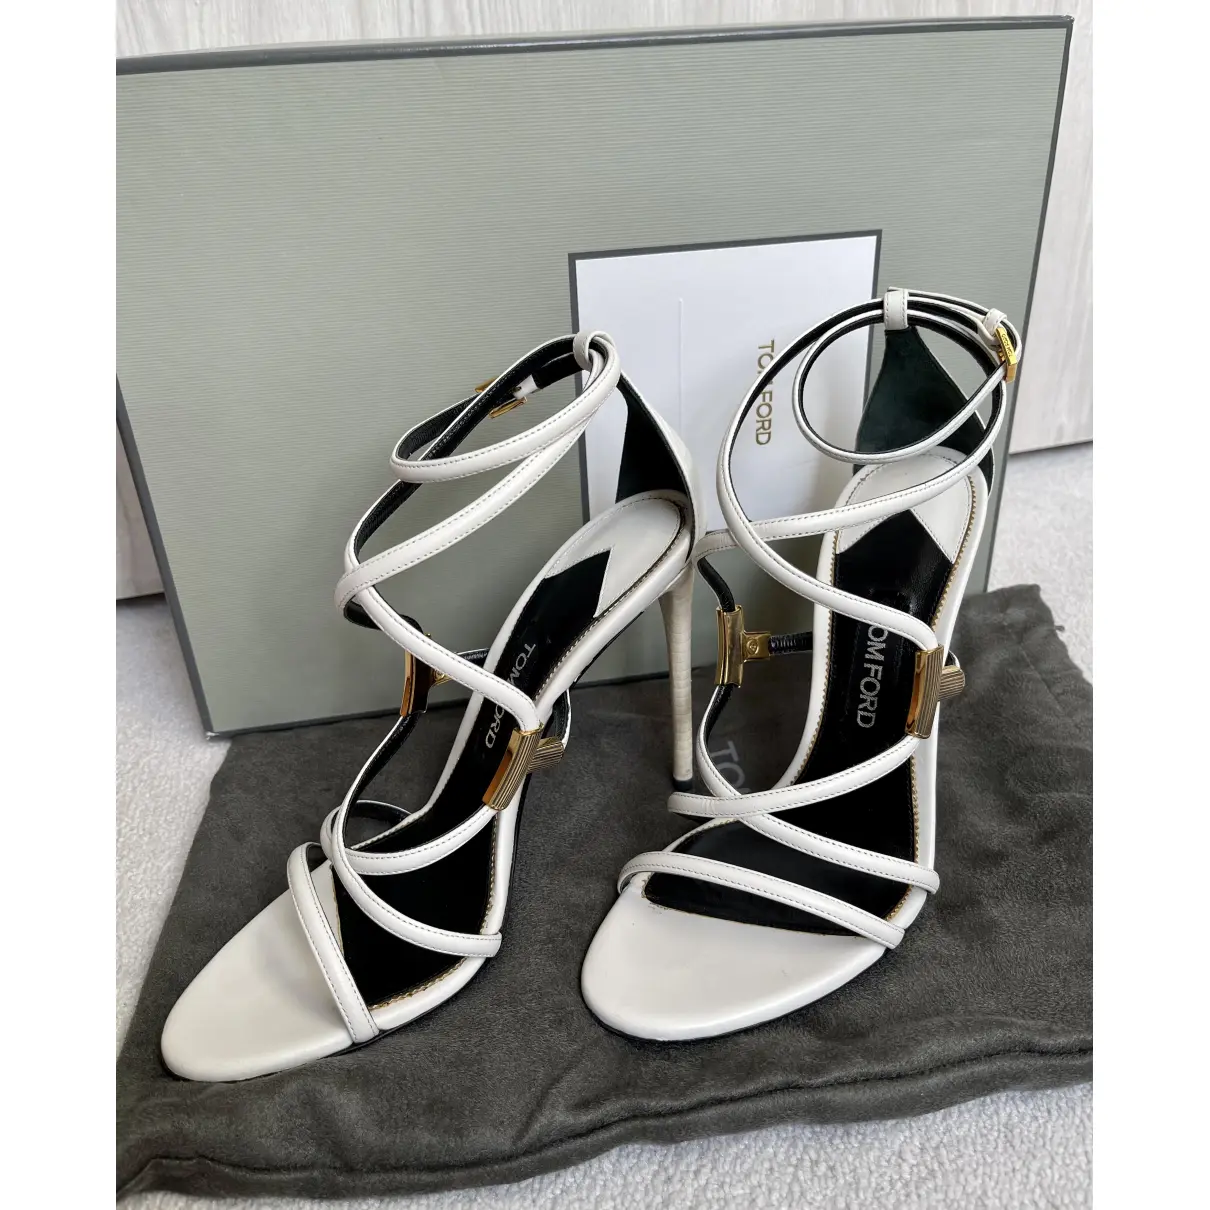 Luxury Tom Ford Sandals Women